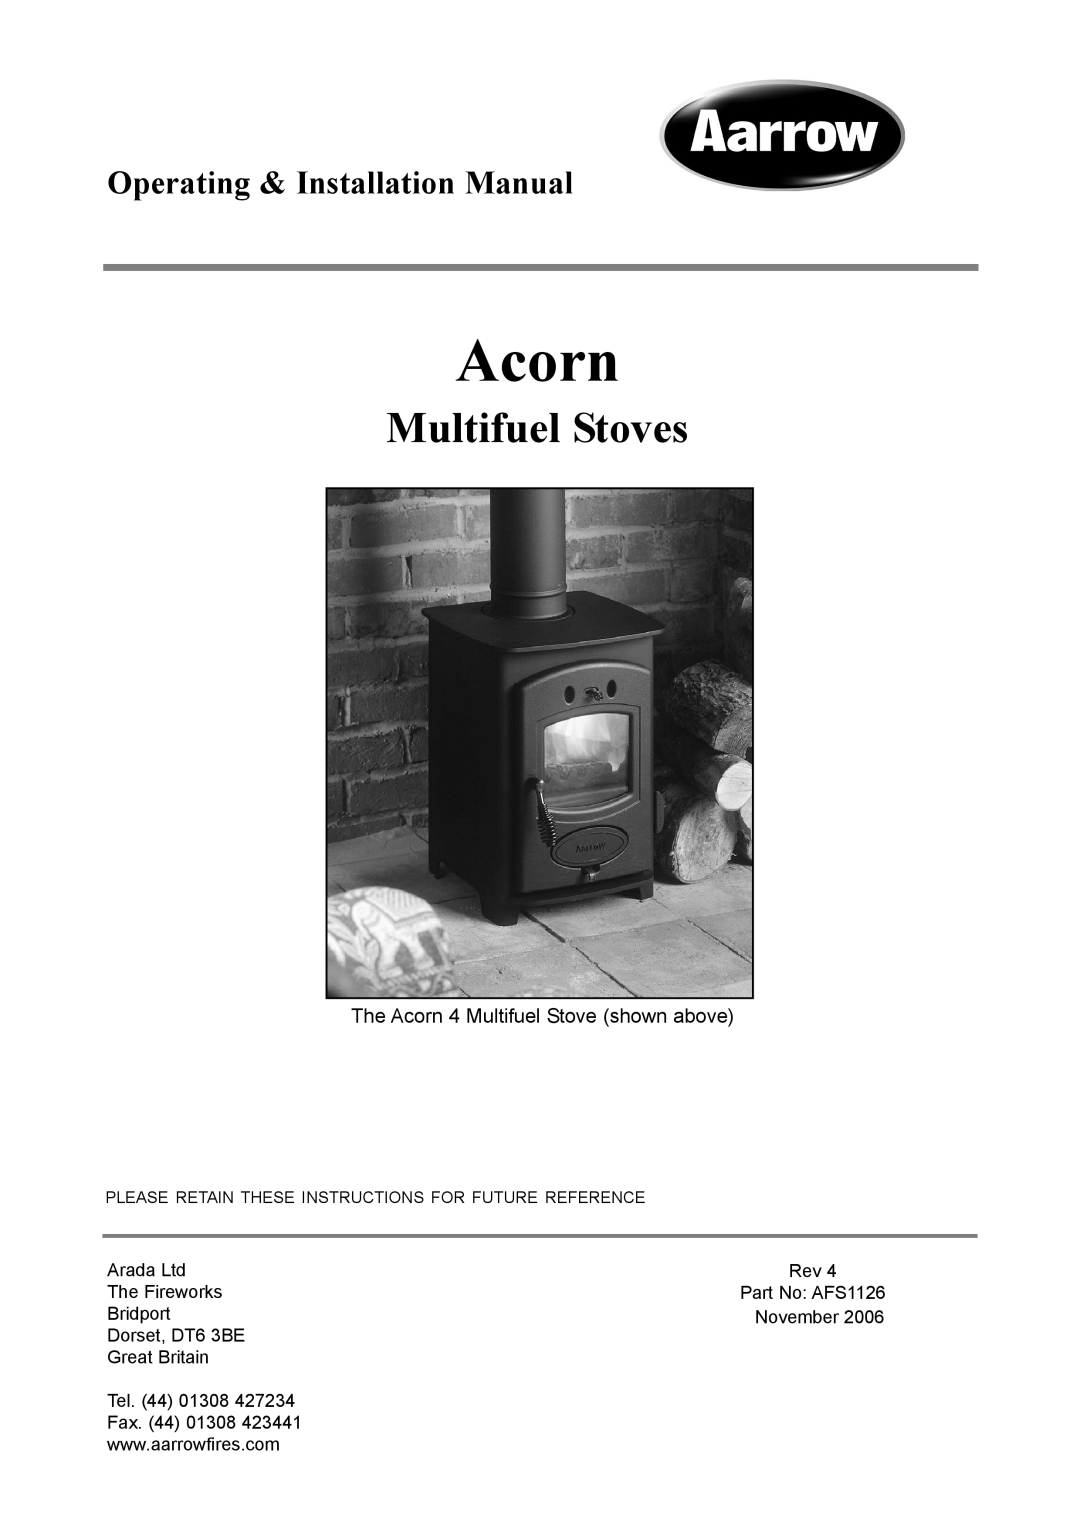 Aarrow Fires Tf 70 installation manual Acorn, Multifuel Stoves, Operating & Installation Manual, The Fireworks, Bridport 